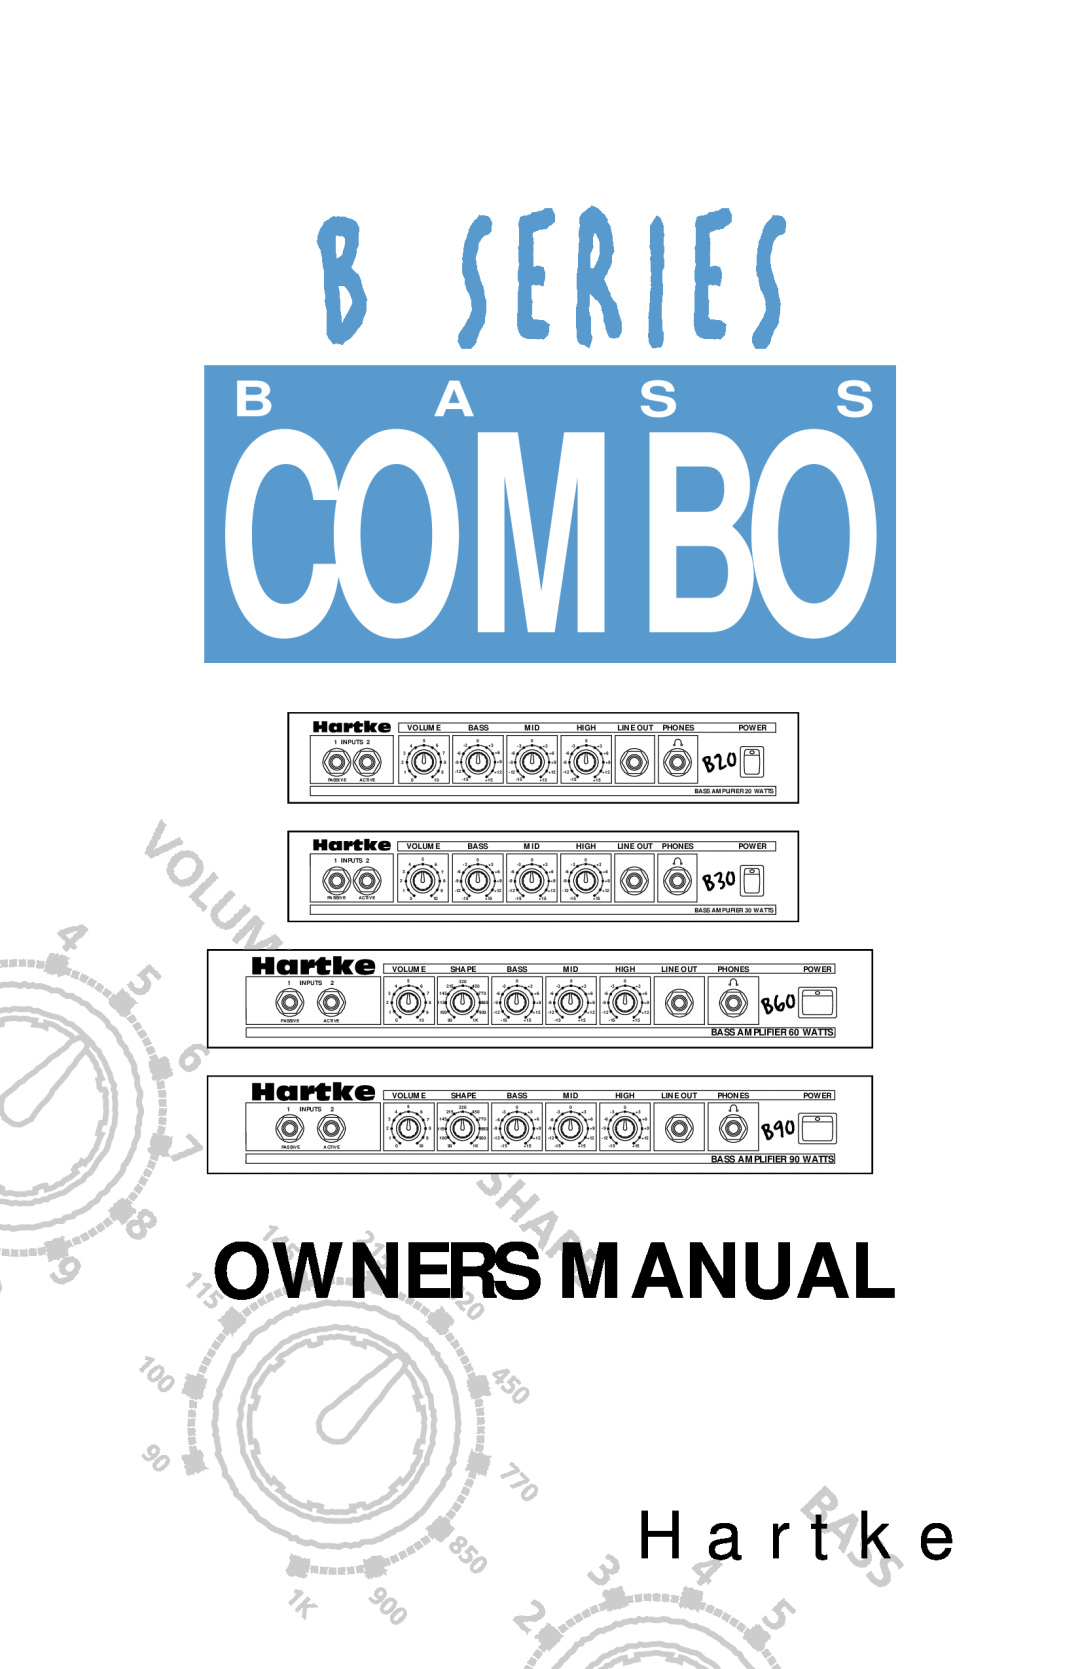 Samson B90 owner manual Combo, B S E R I E S, Hartke, B A S S 